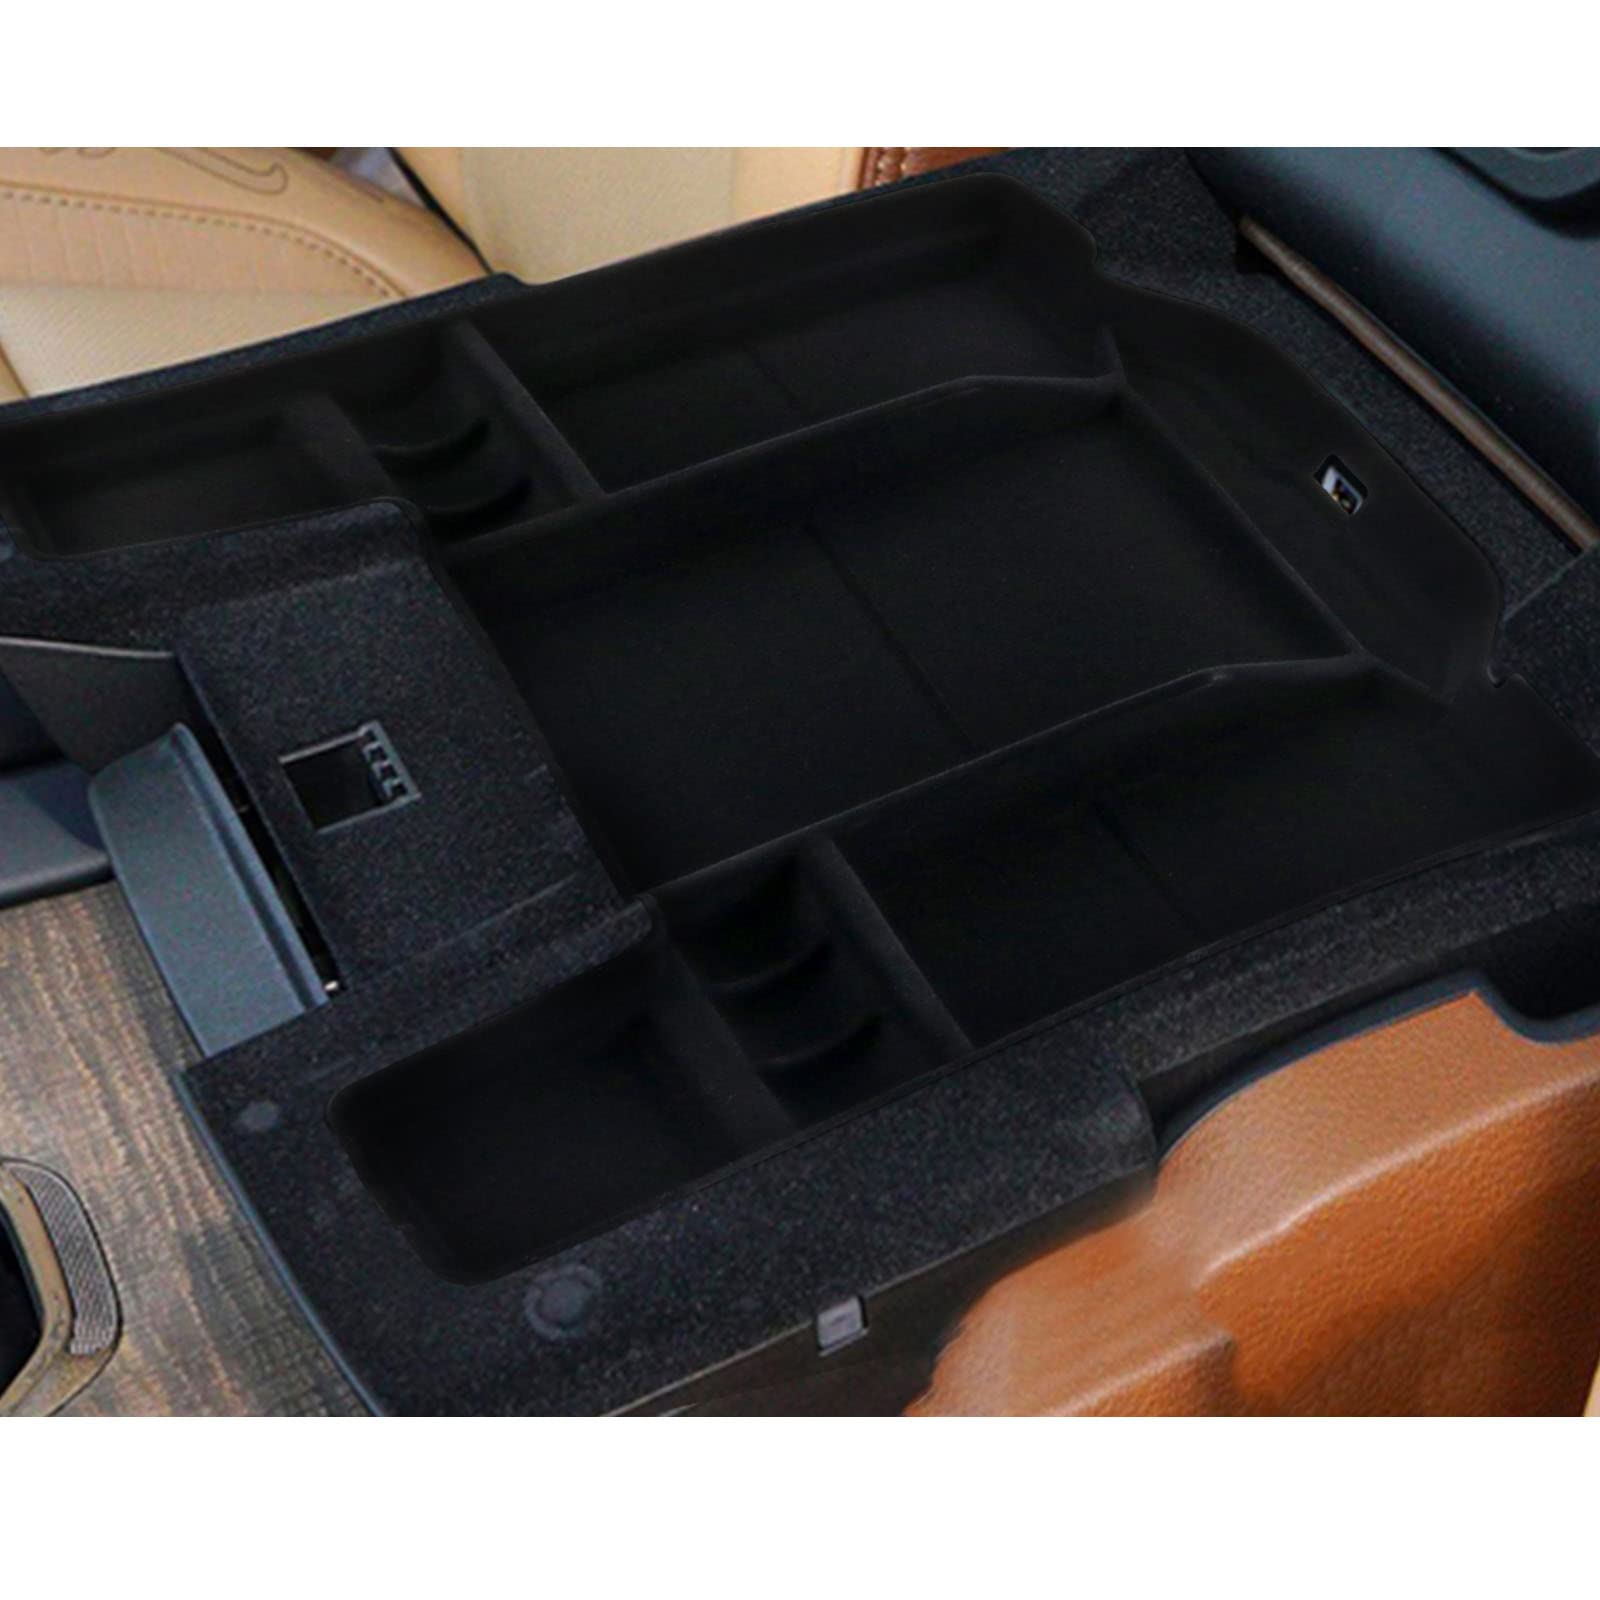 Dodge RAM 1500 Center Console Organizer Tray 2019+ - LFOTPP Car Accessories